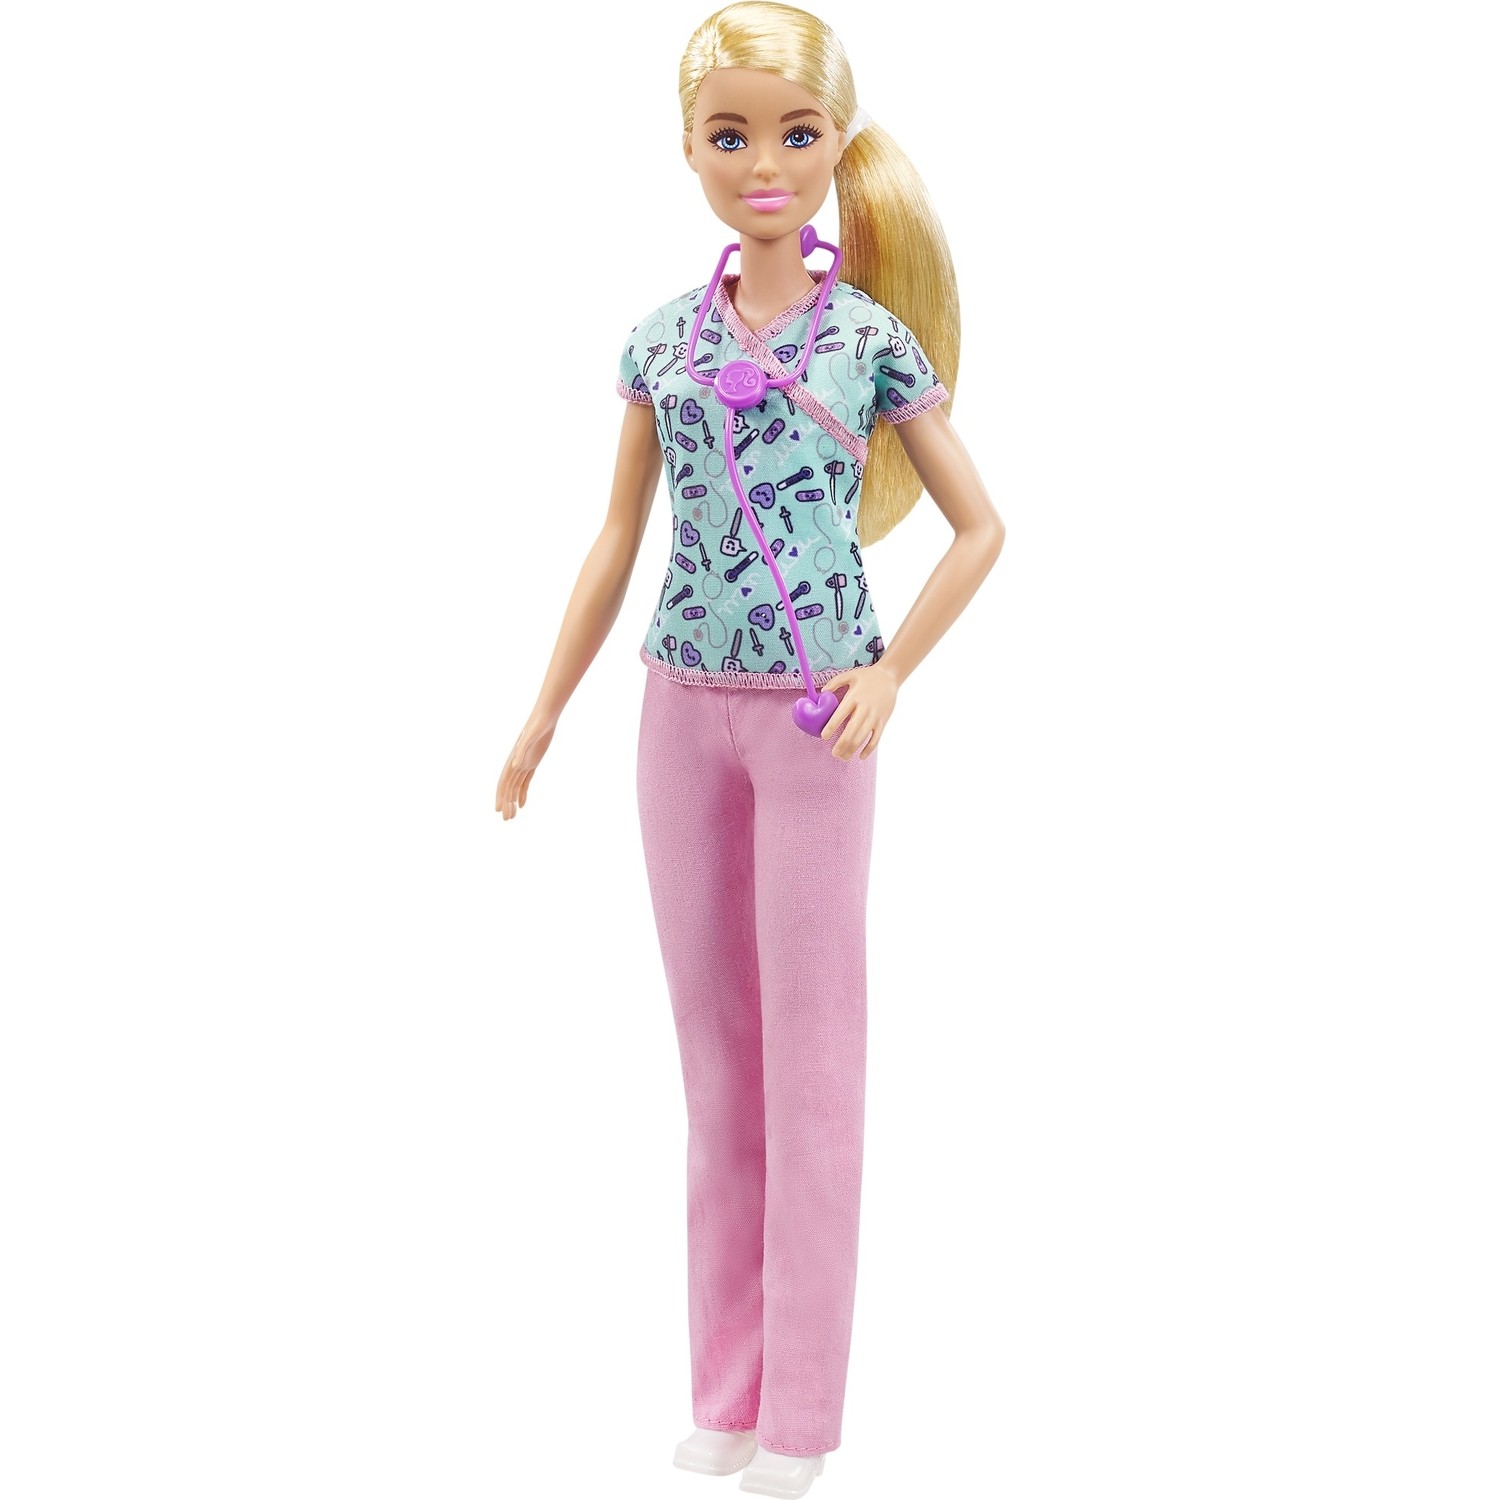 Кукла Barbie медсестра GTW39 кукла балерина barbie® блондинка 30 см gjl59